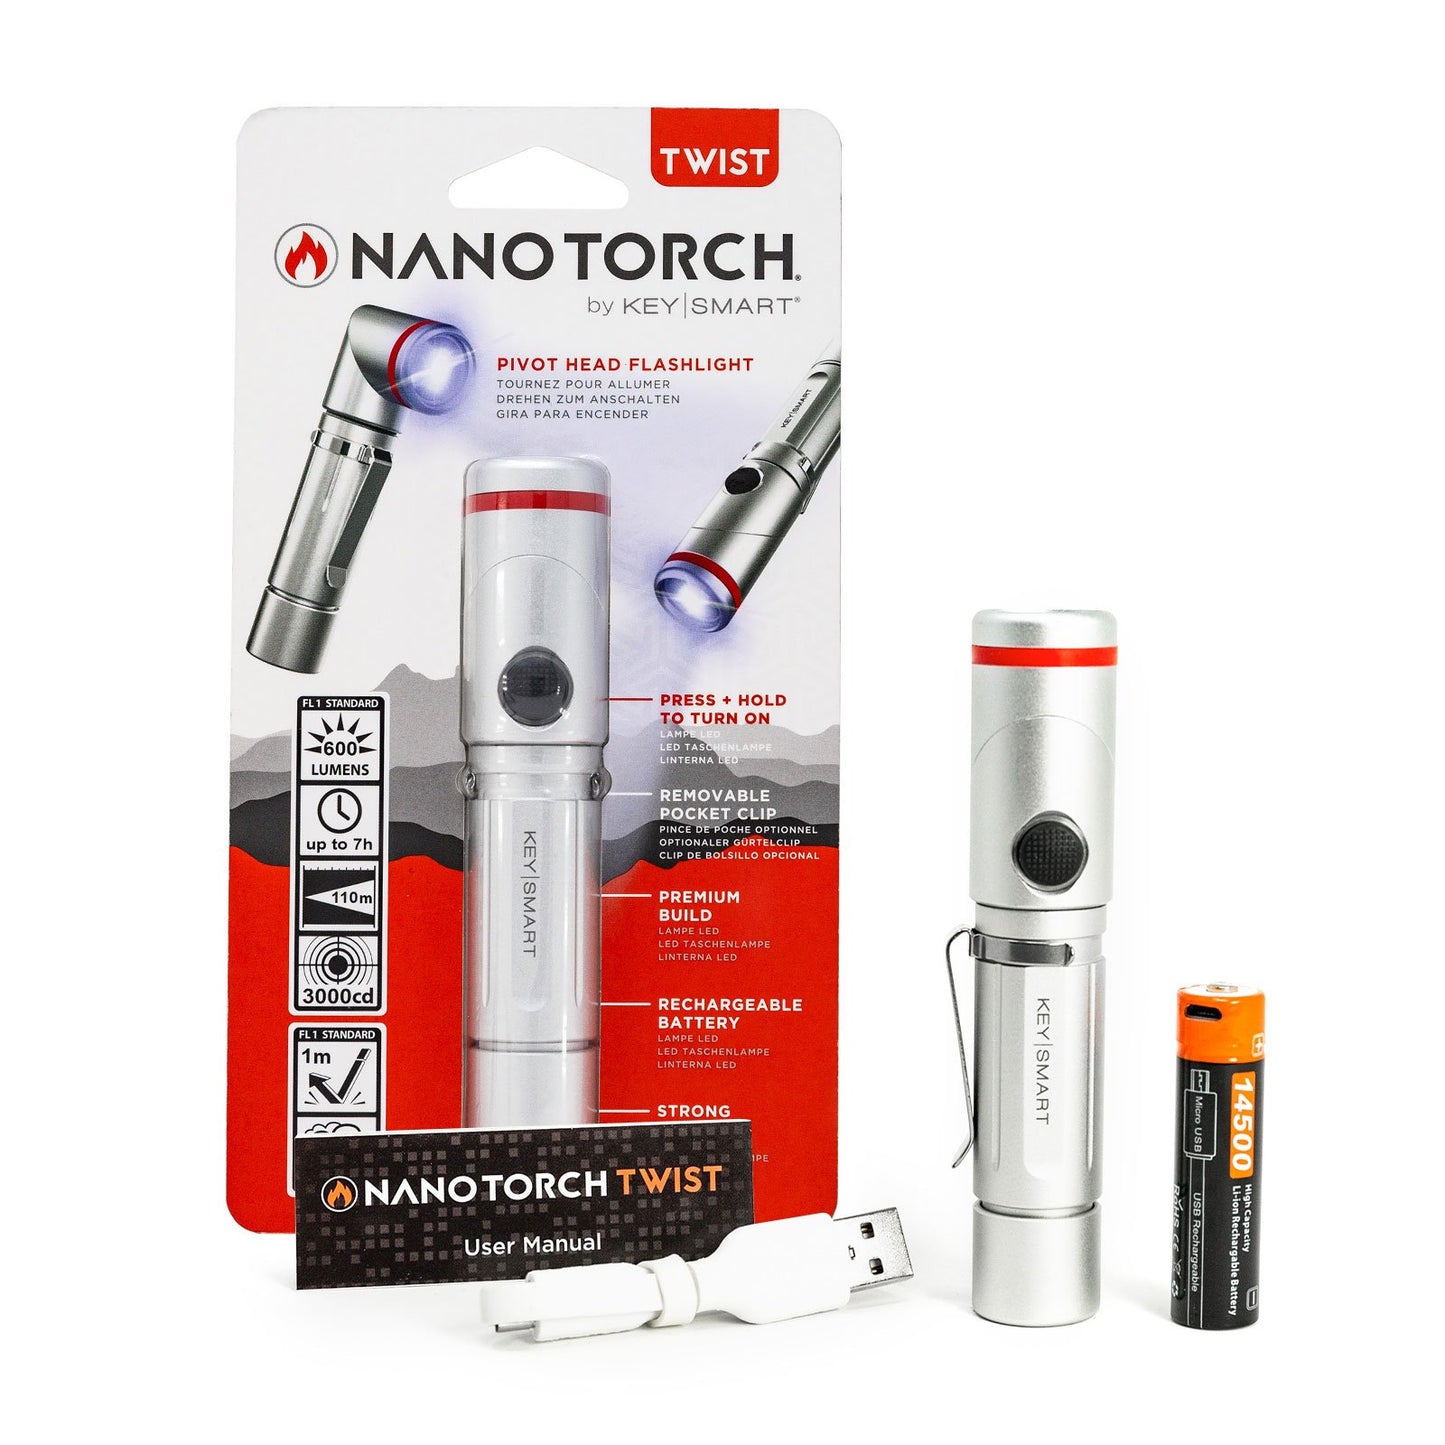 NanoTorch Twist